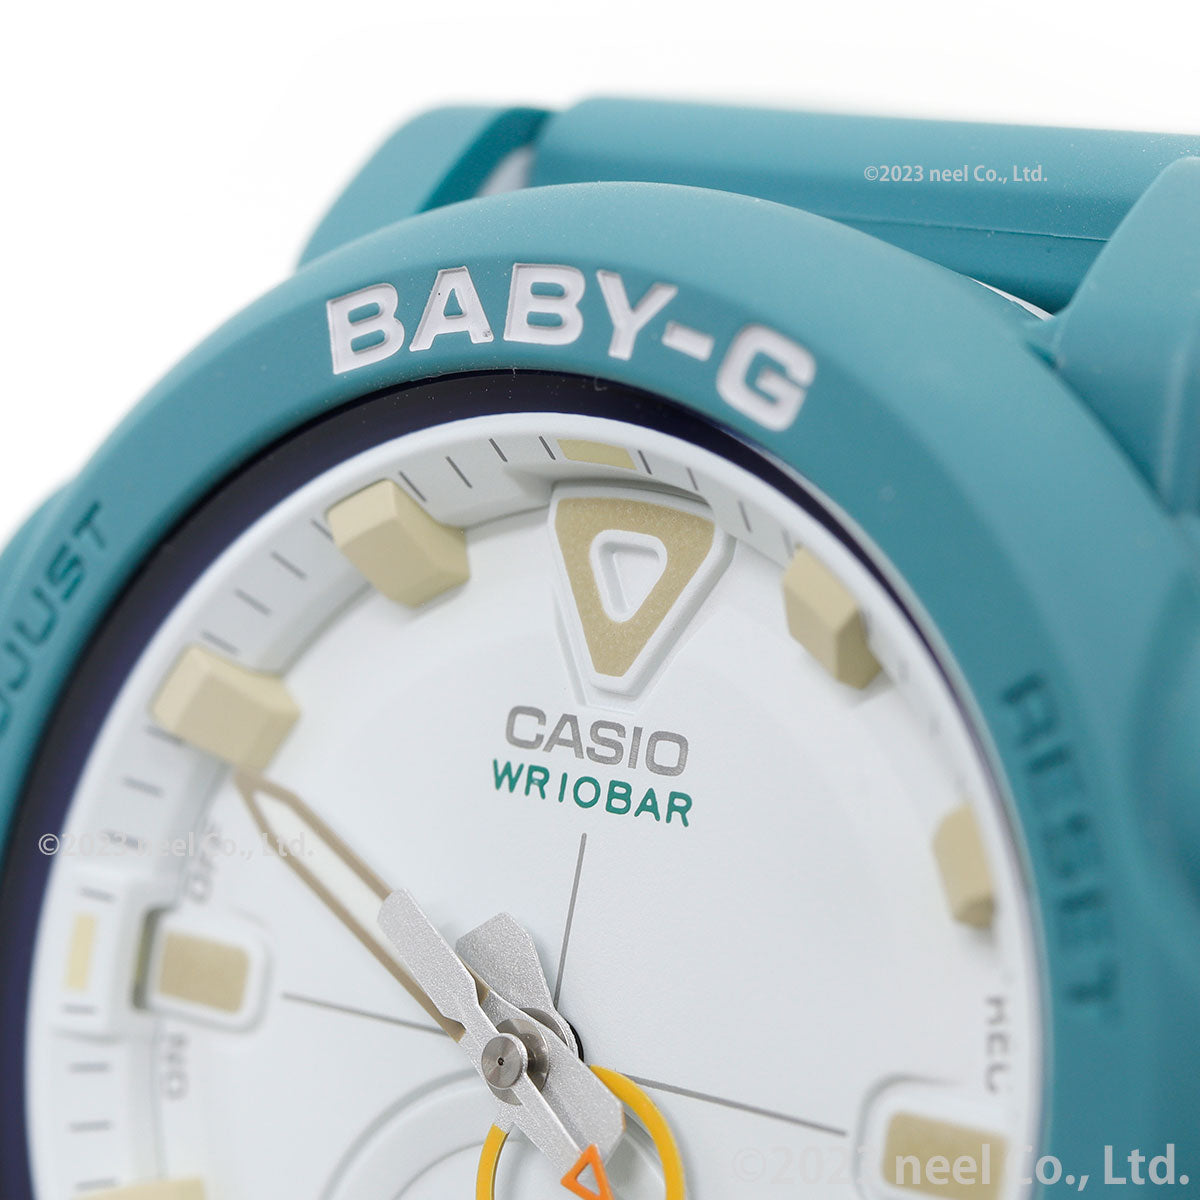 BABY-G カシオ ベビーG レディース アナデジ 腕時計 BGA-310RP-3AJF ターコイズグリーン